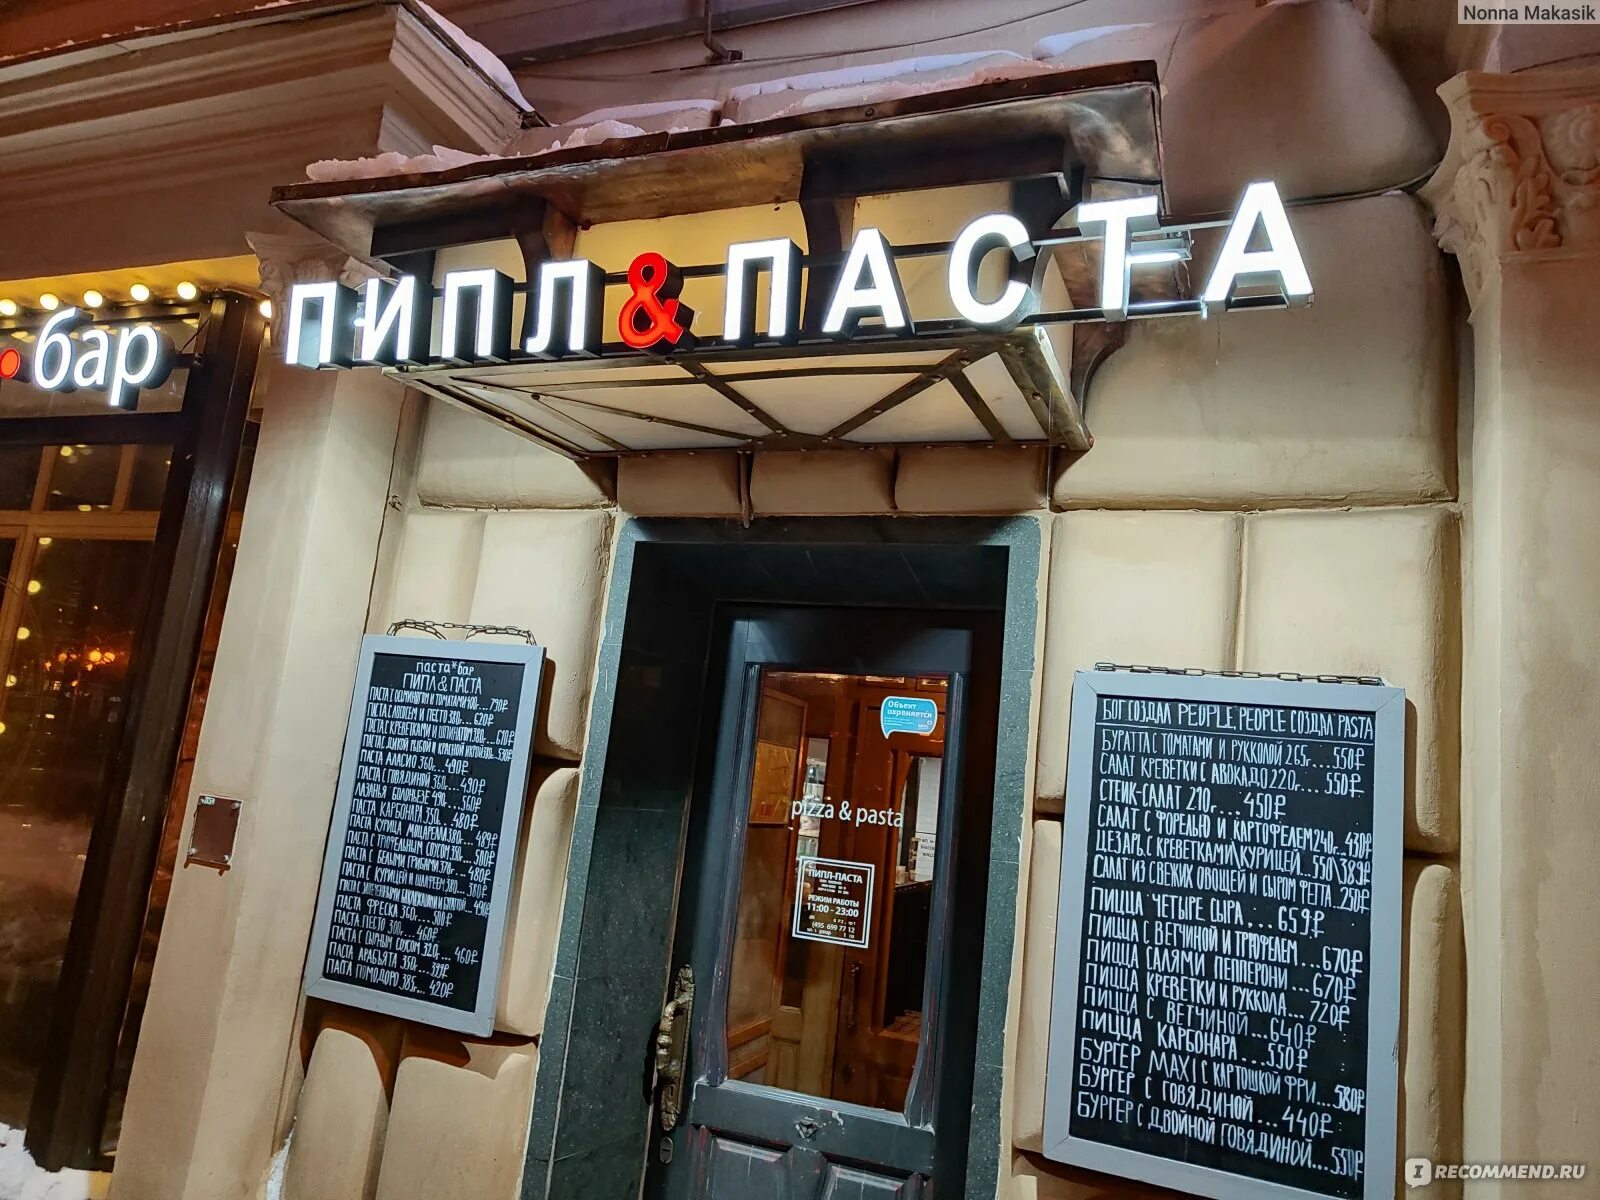 Ресторан пипл паста. Пипл бар Москва. Кулинария пипл паста Москва.